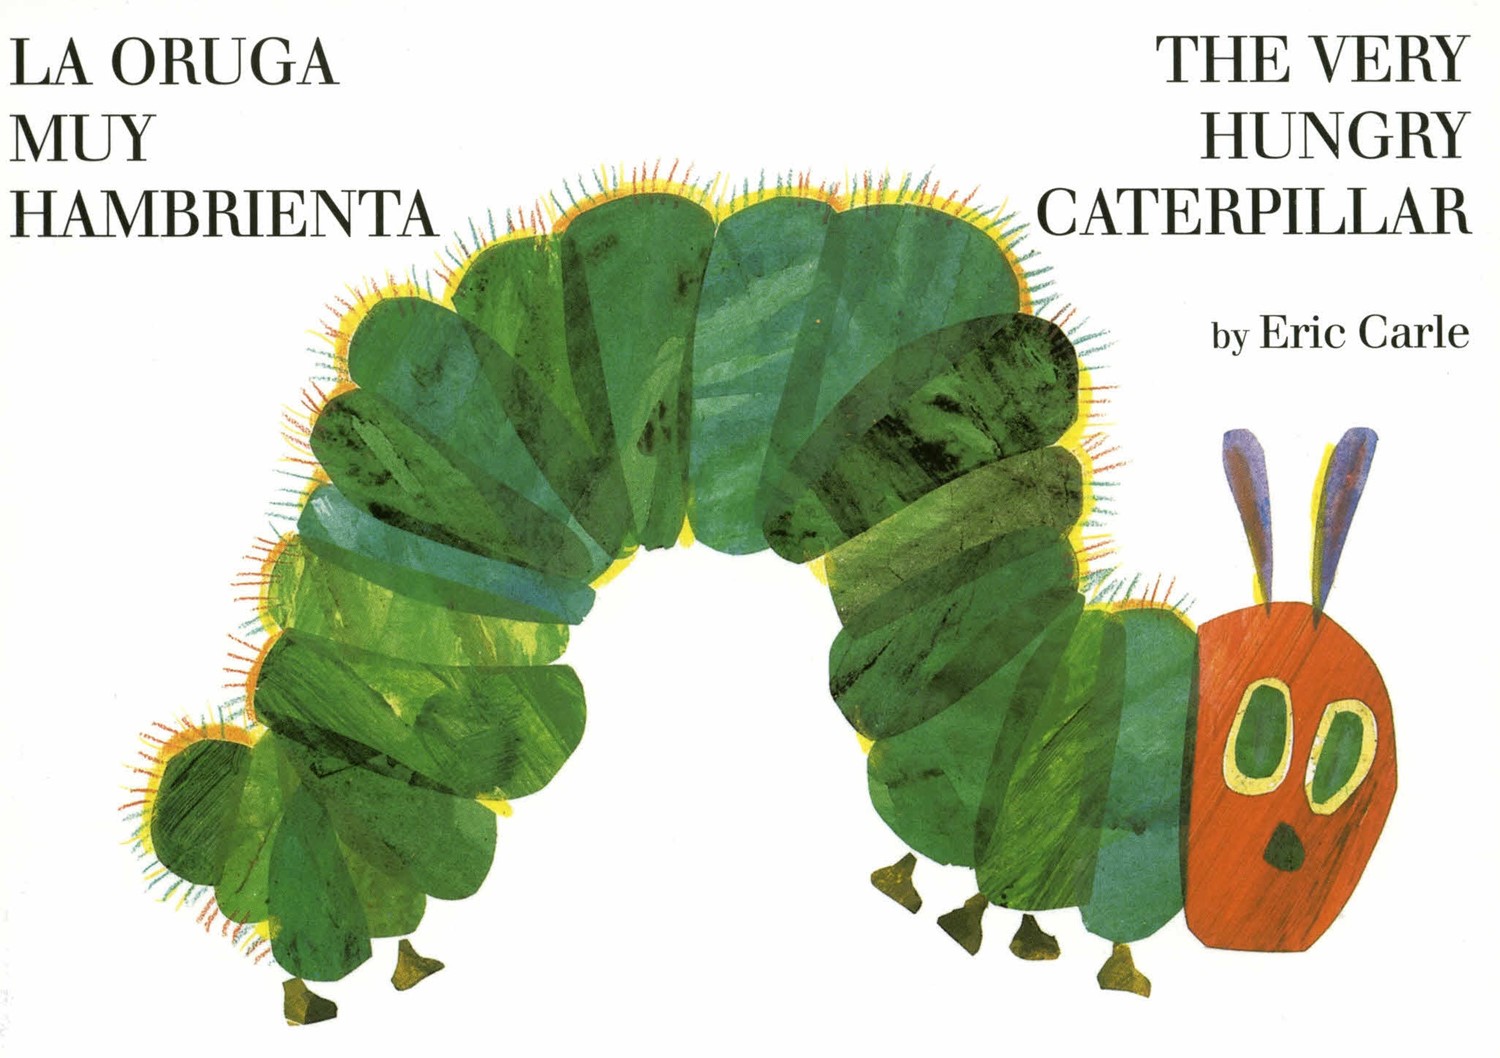 La oruga muy hambrienta/ The Very Hungry Caterpillar (BBD) La oruga muy hambrienta/The Very Hungry Caterpillar (BBD)